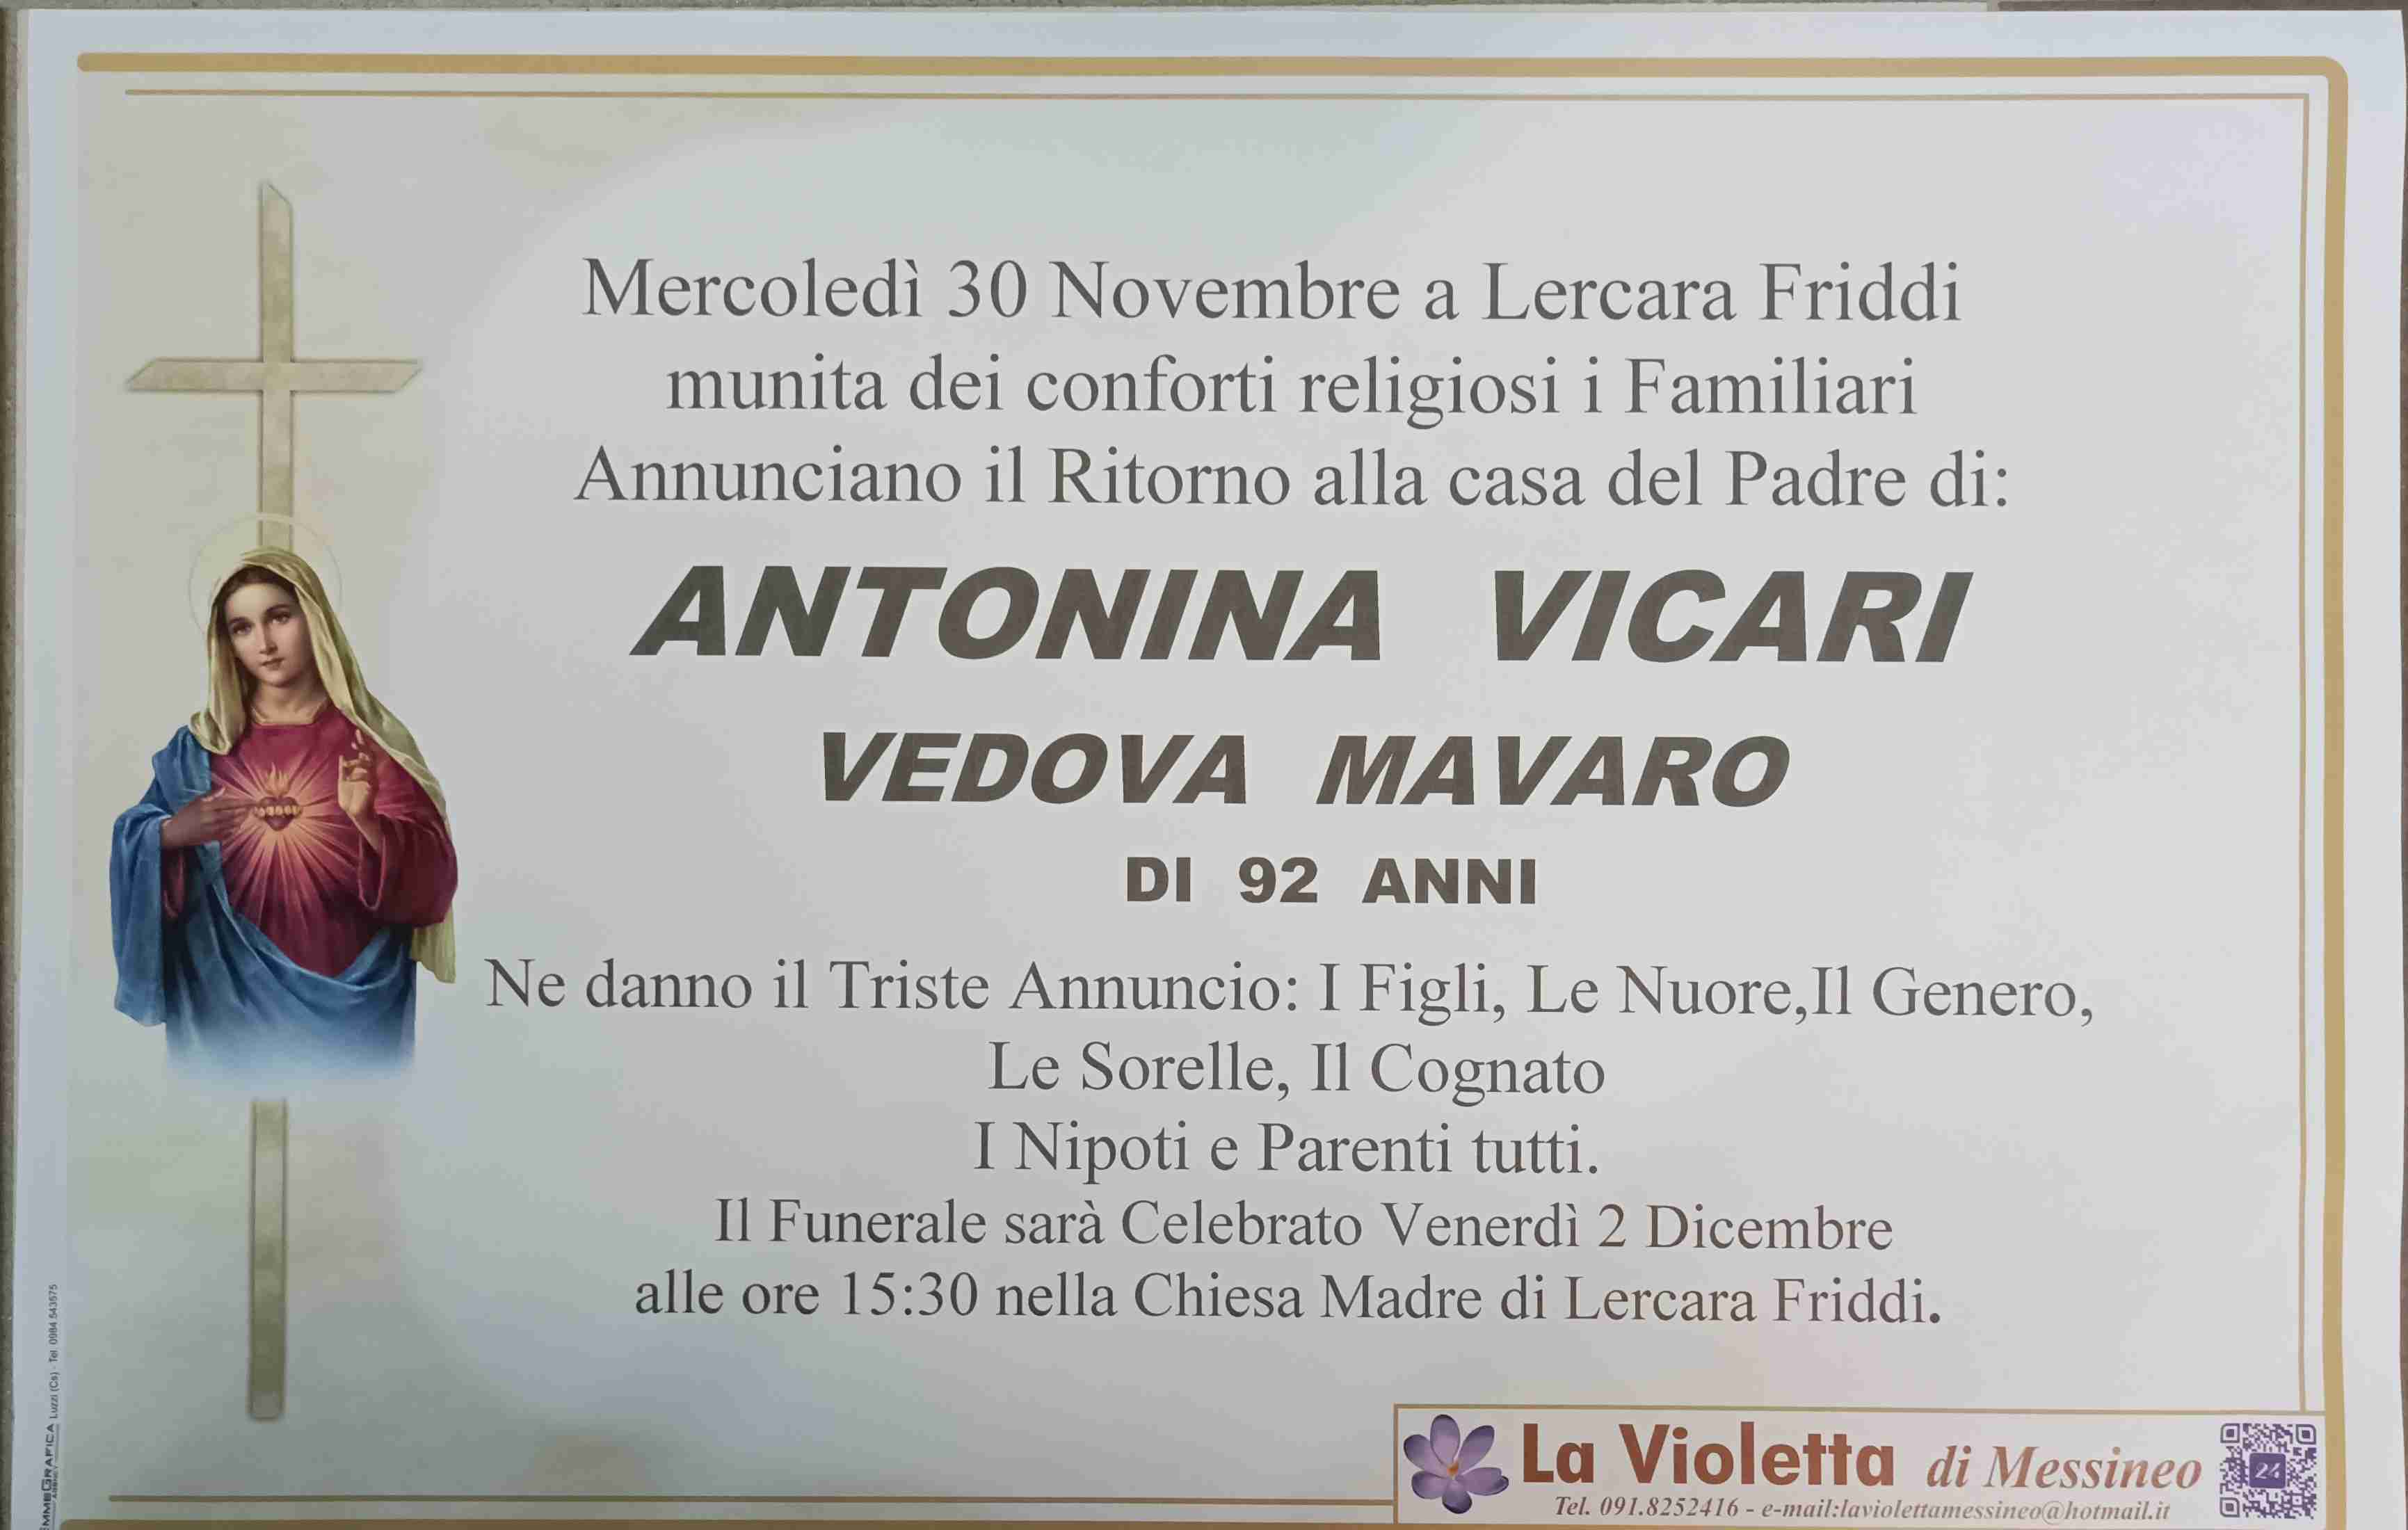 Antonina Vicari